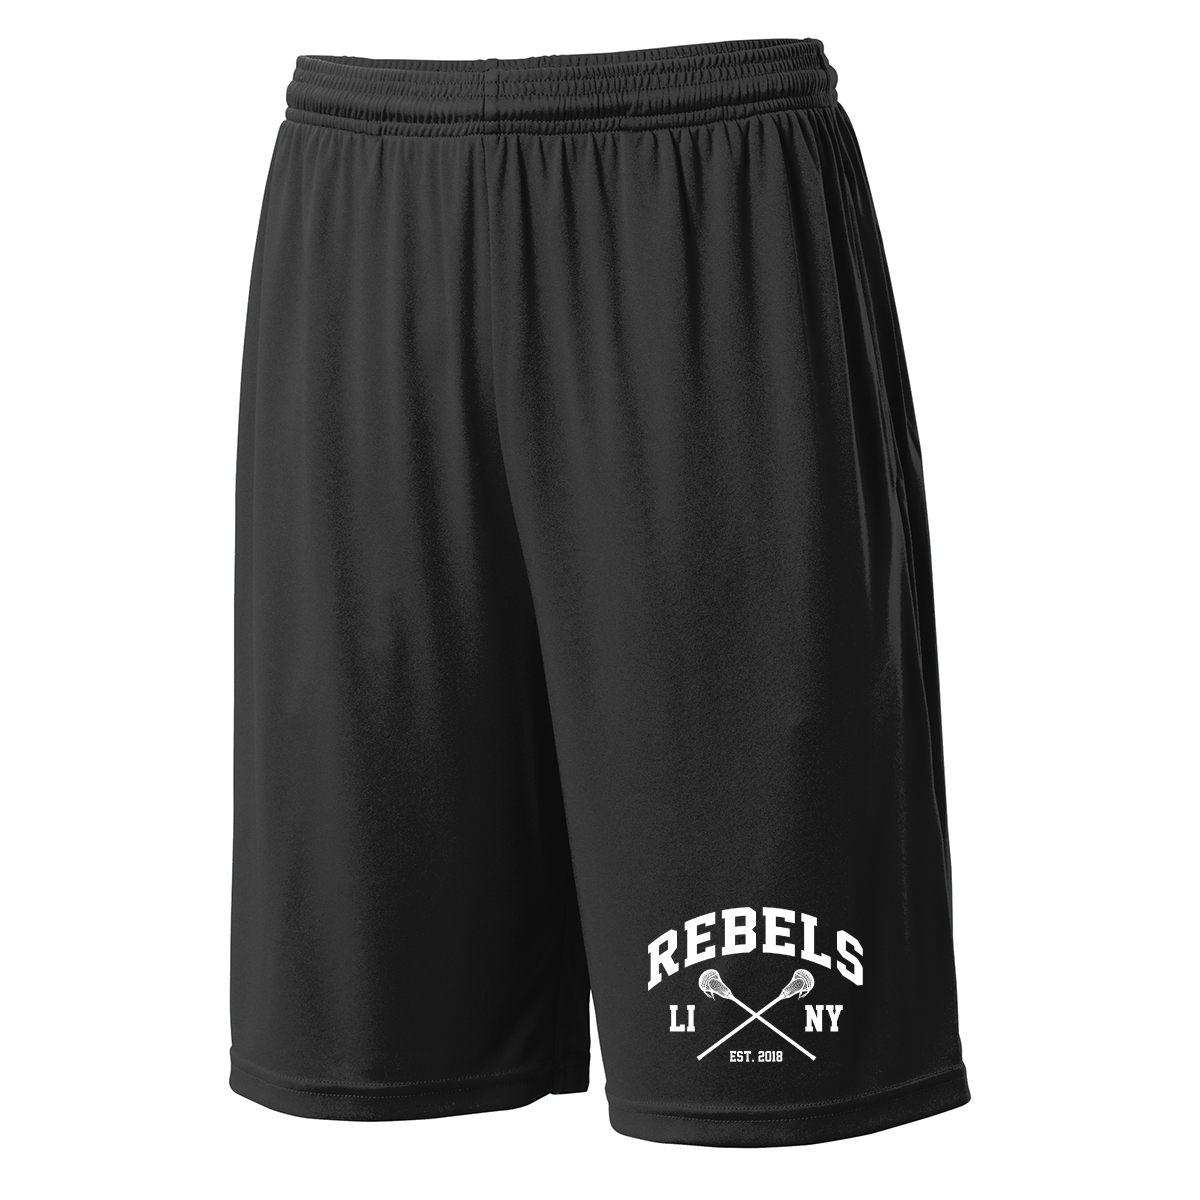 Rebels Lacrosse Shorts